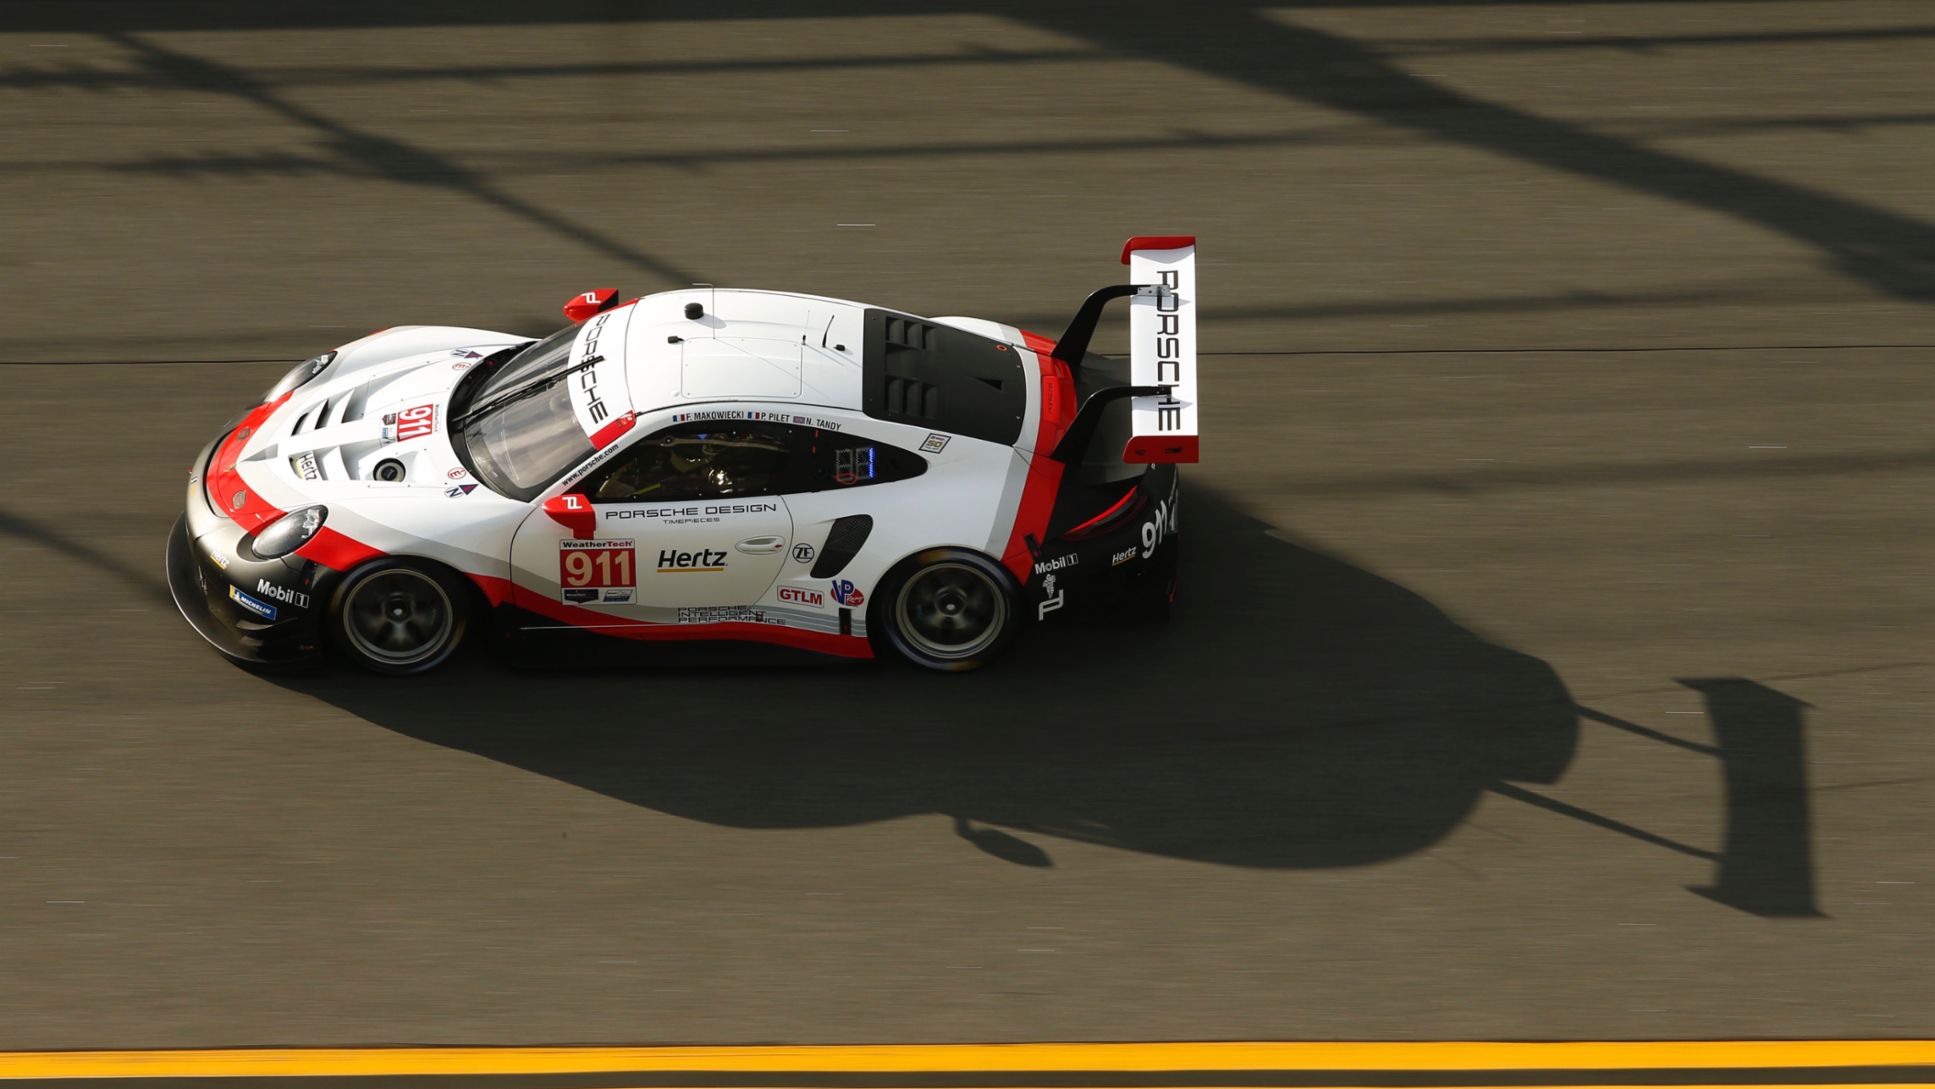 911 RSR, Porsche GT Team, IMSA WeatherTech SportsCar Championship, Test, Daytona, 2019, Porsche AG